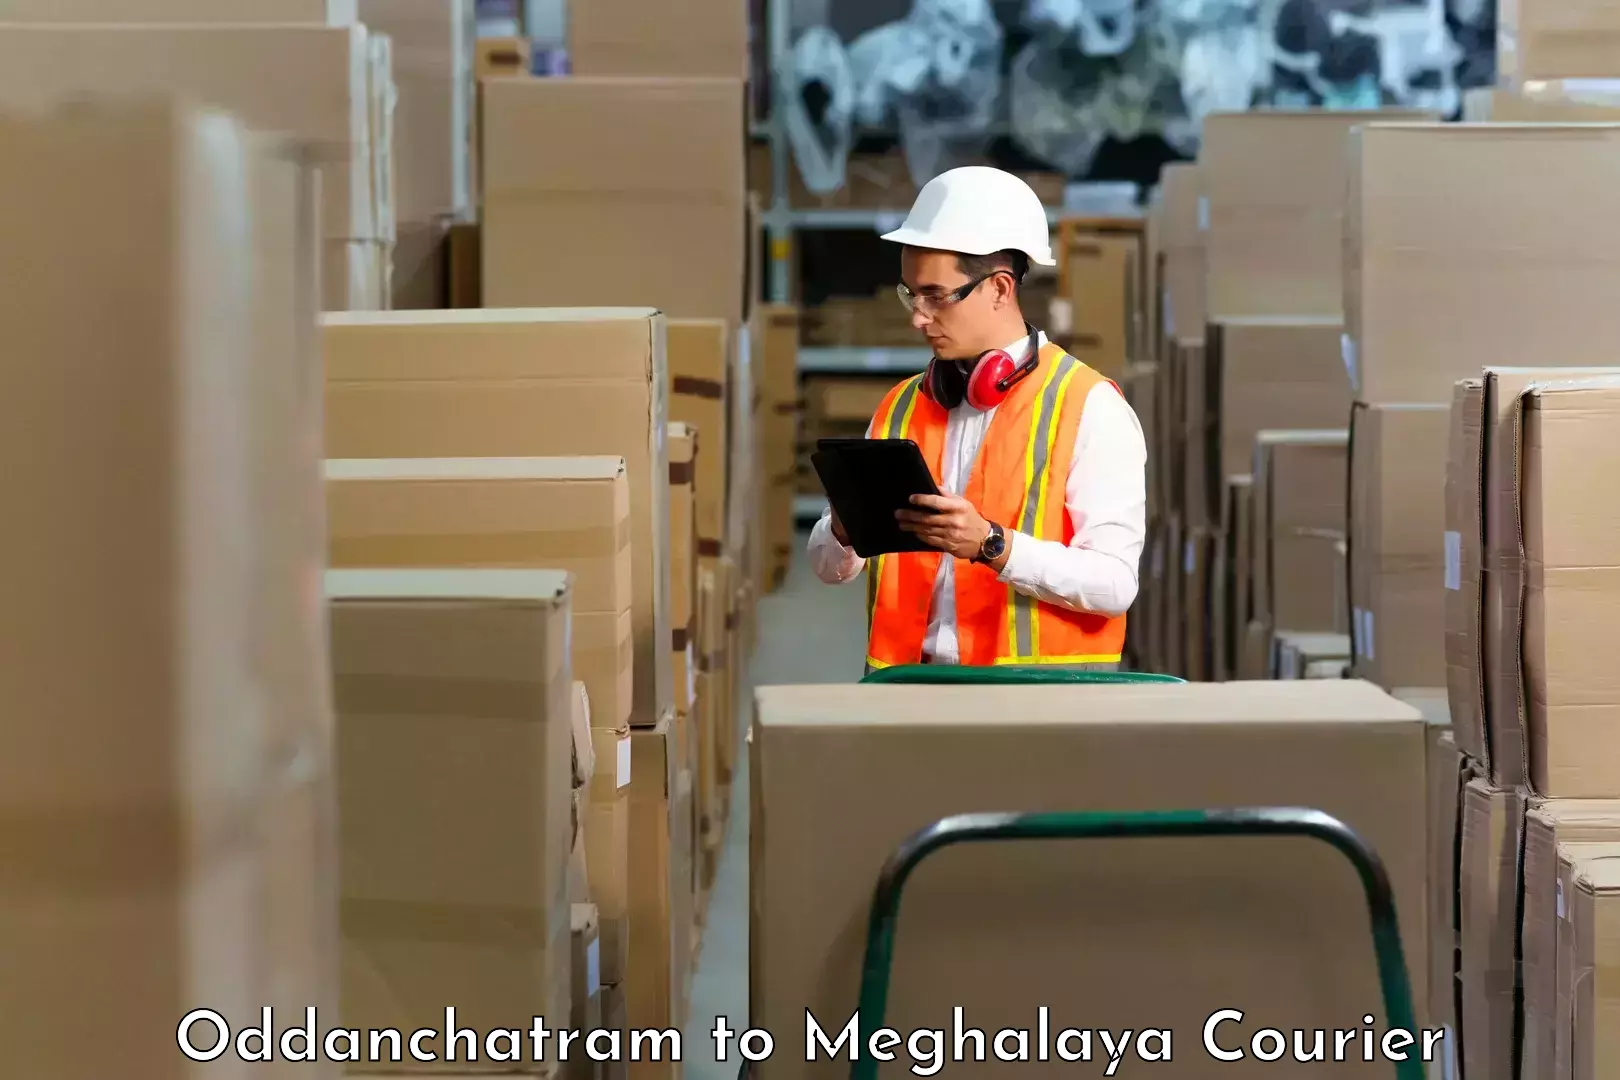 Specialized shipment handling Oddanchatram to Cherrapunji